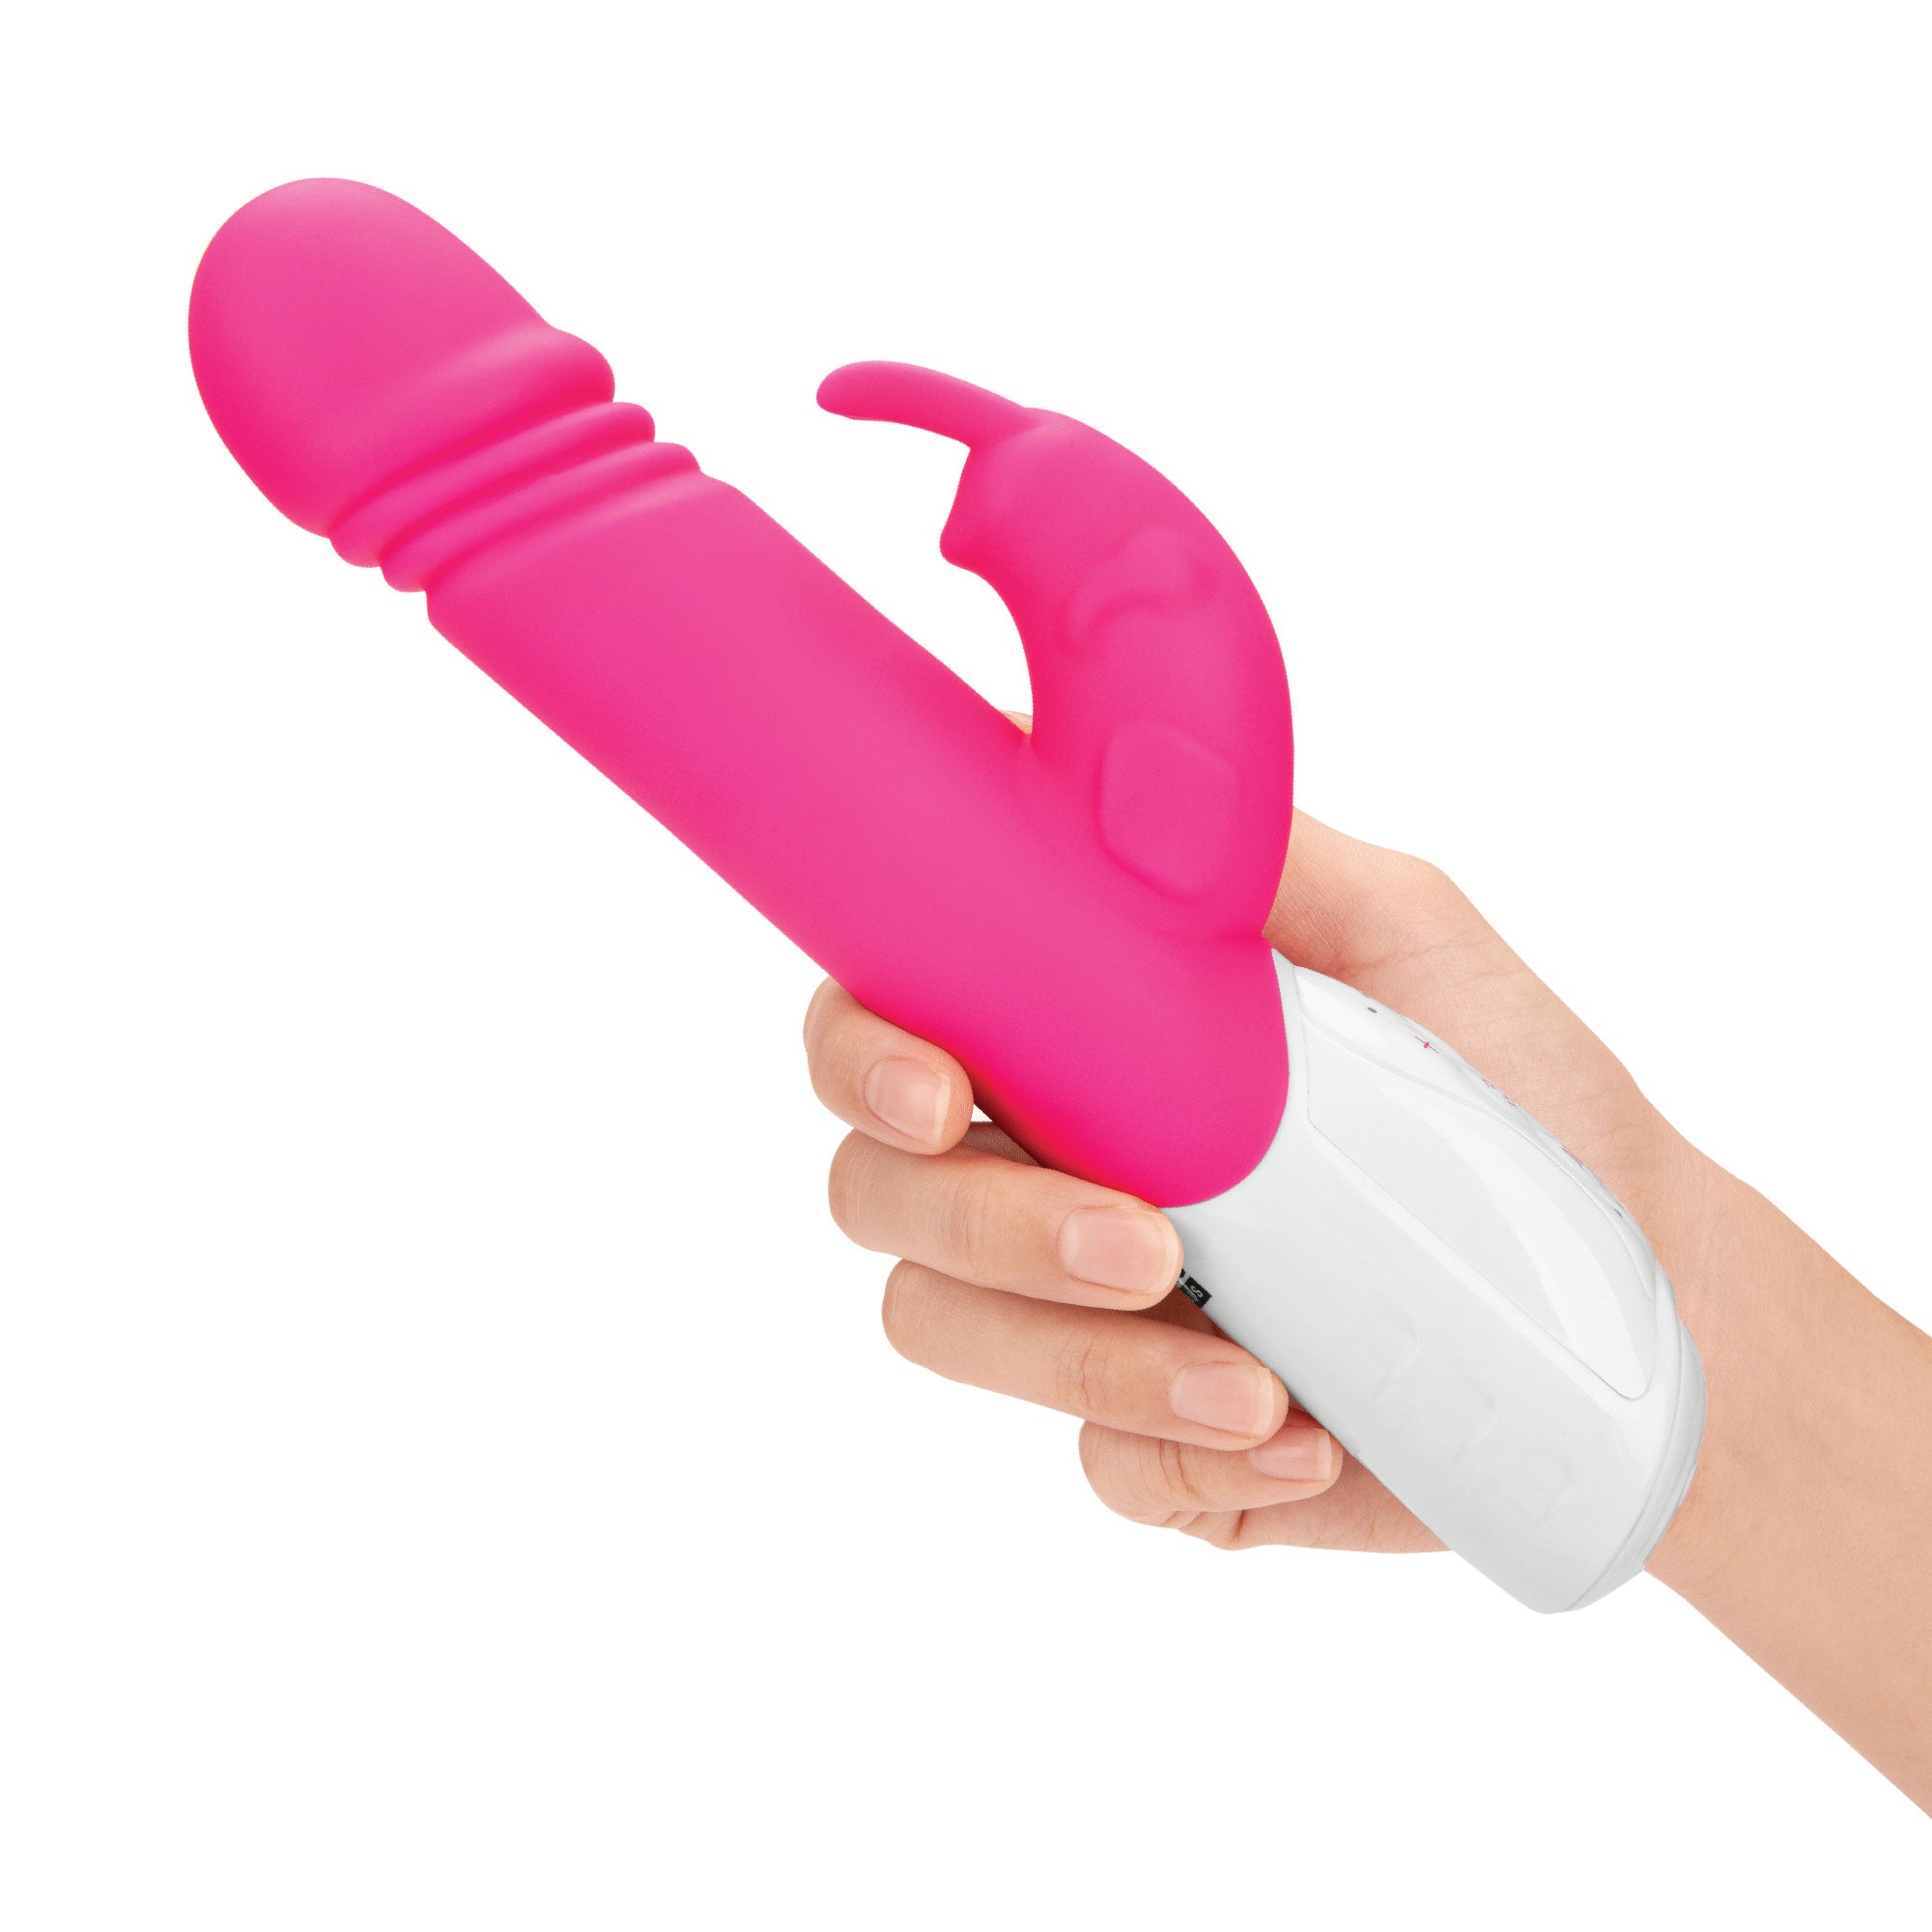 Rabbit Essentials Thrusting Rabbit Vibrator with Throbbing Shaft in Pink at glastoy.com